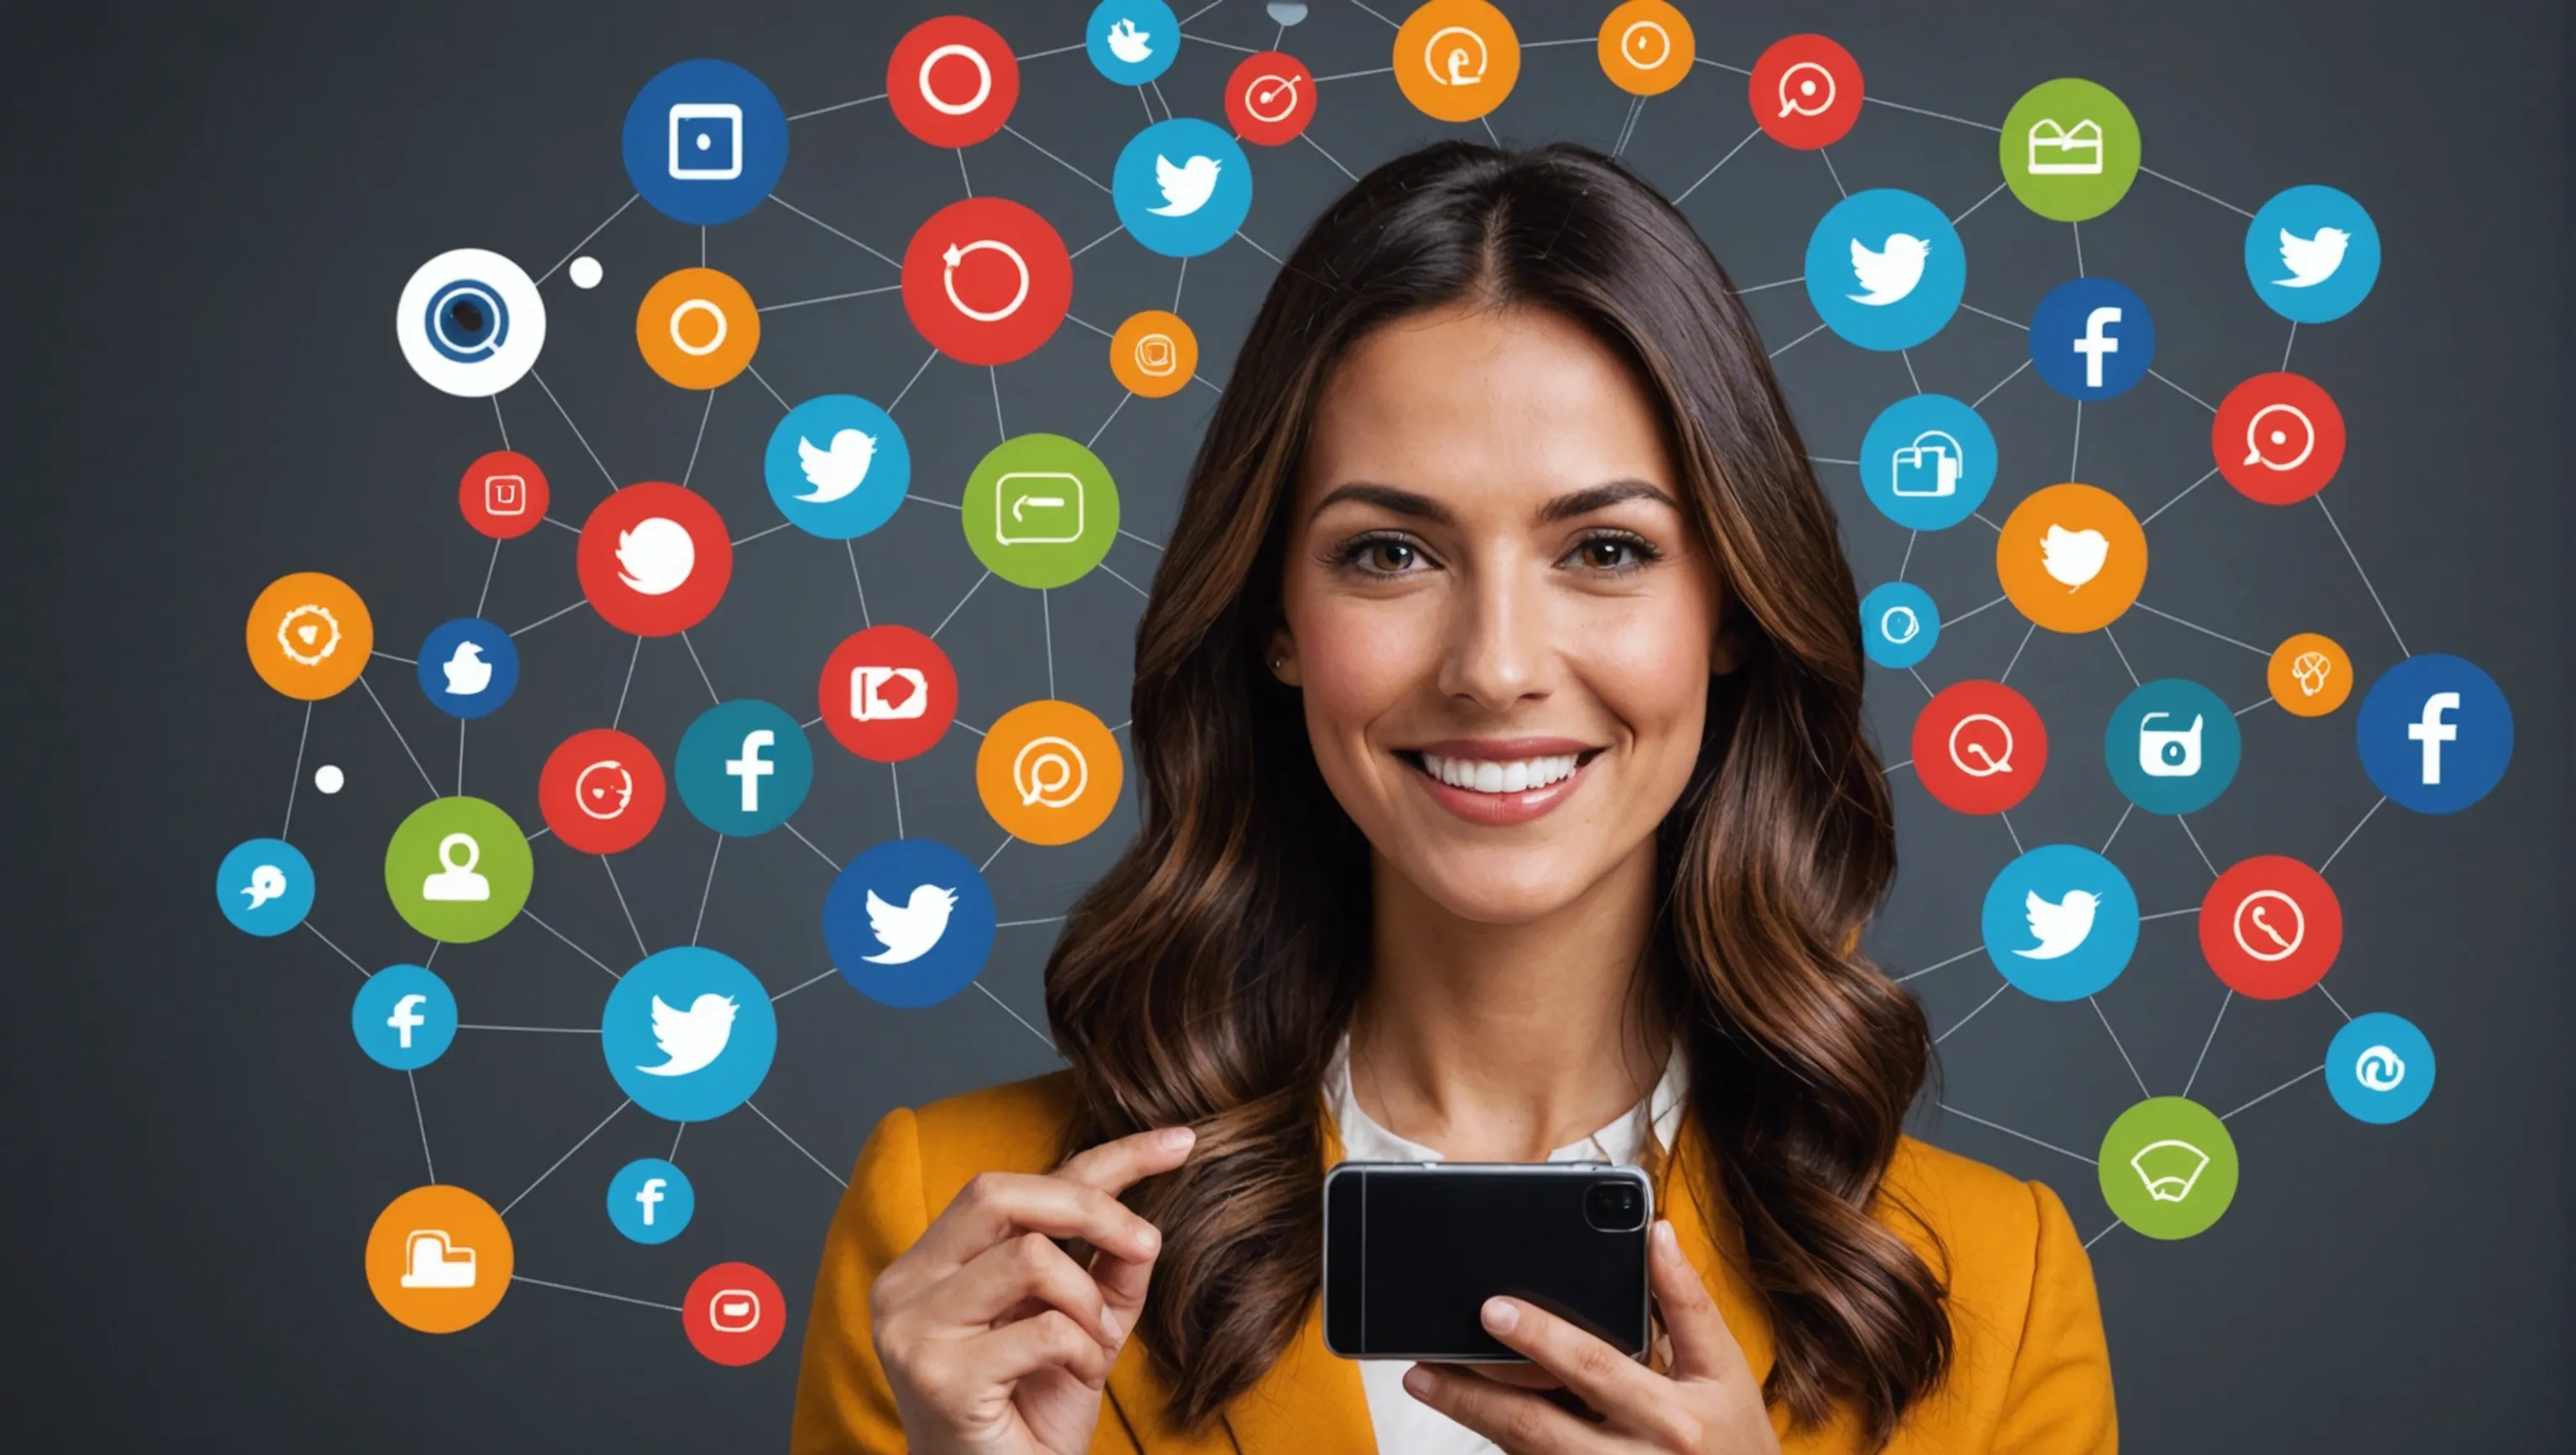 Marketing professional utilizing social media targeting and segmentation